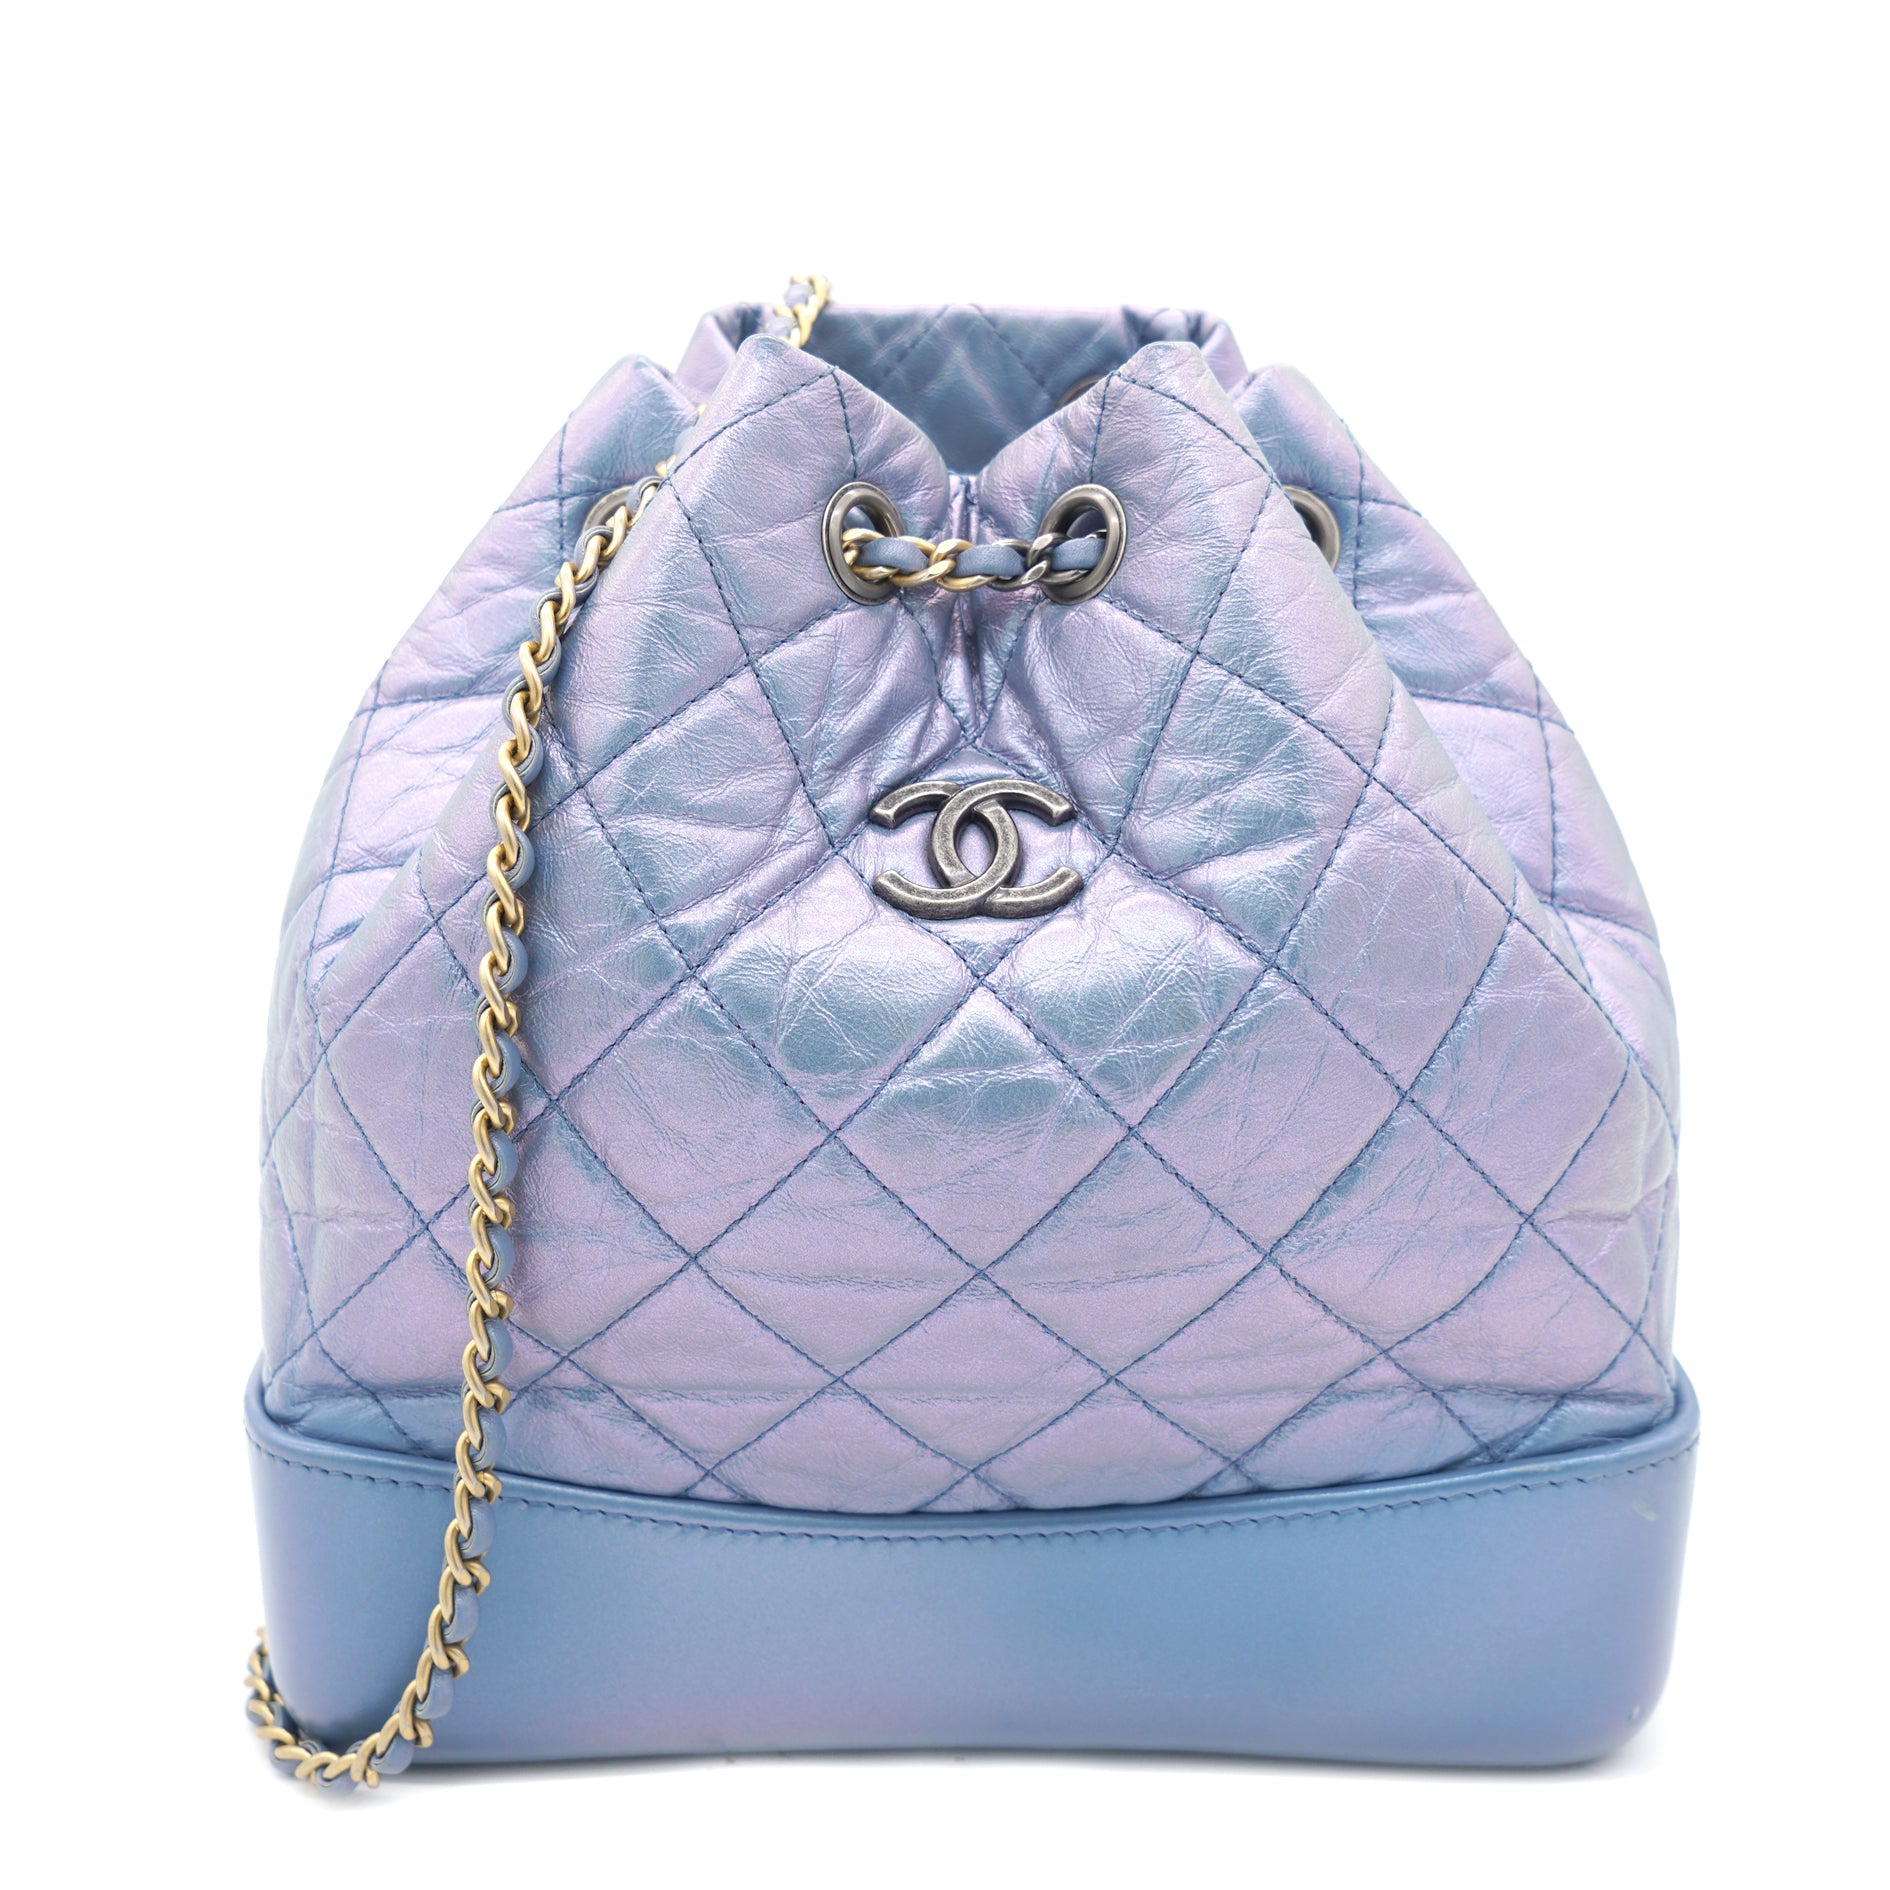 My Chanel Gabrielle Backpack (Wear & Tear Review + Mini Cartier